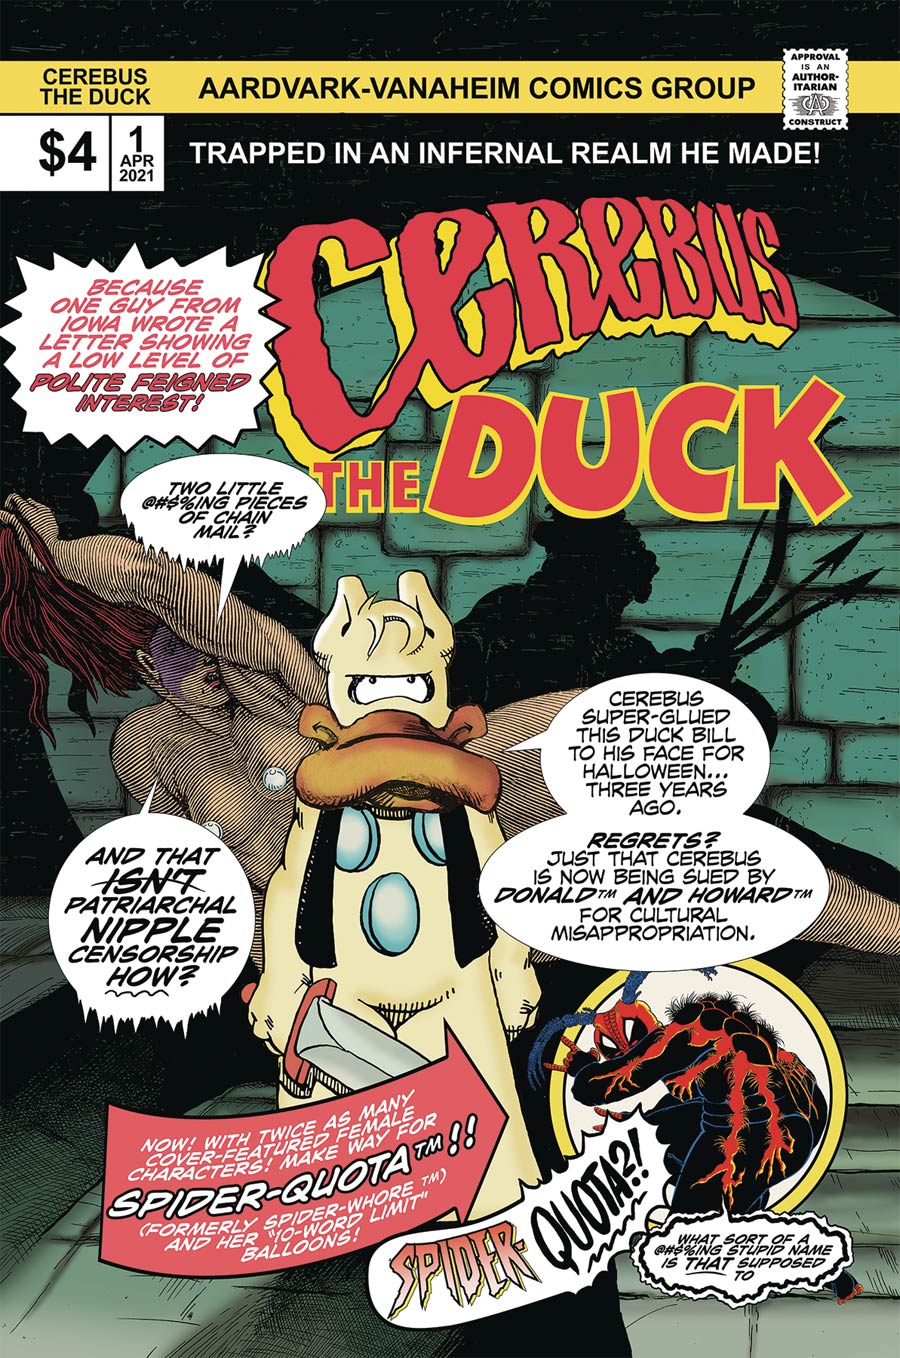 Cerebus The Duck #1 (One Shot)